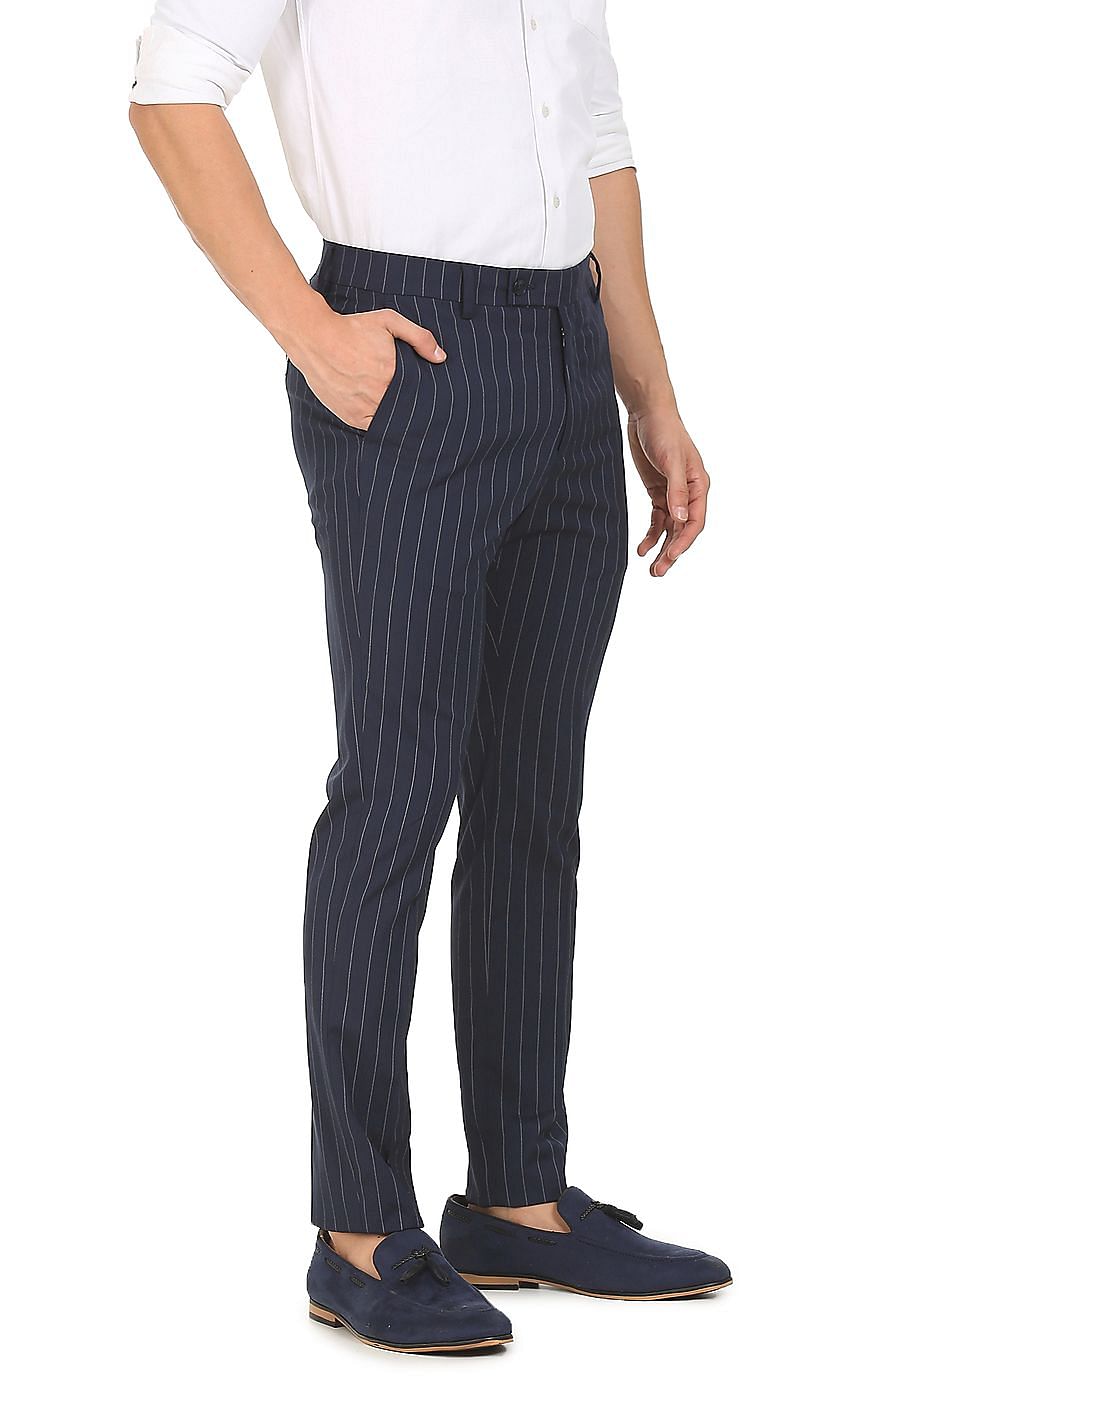 Buy Kazo Black  White Striped Trousers for Women Online  Tata CLiQ